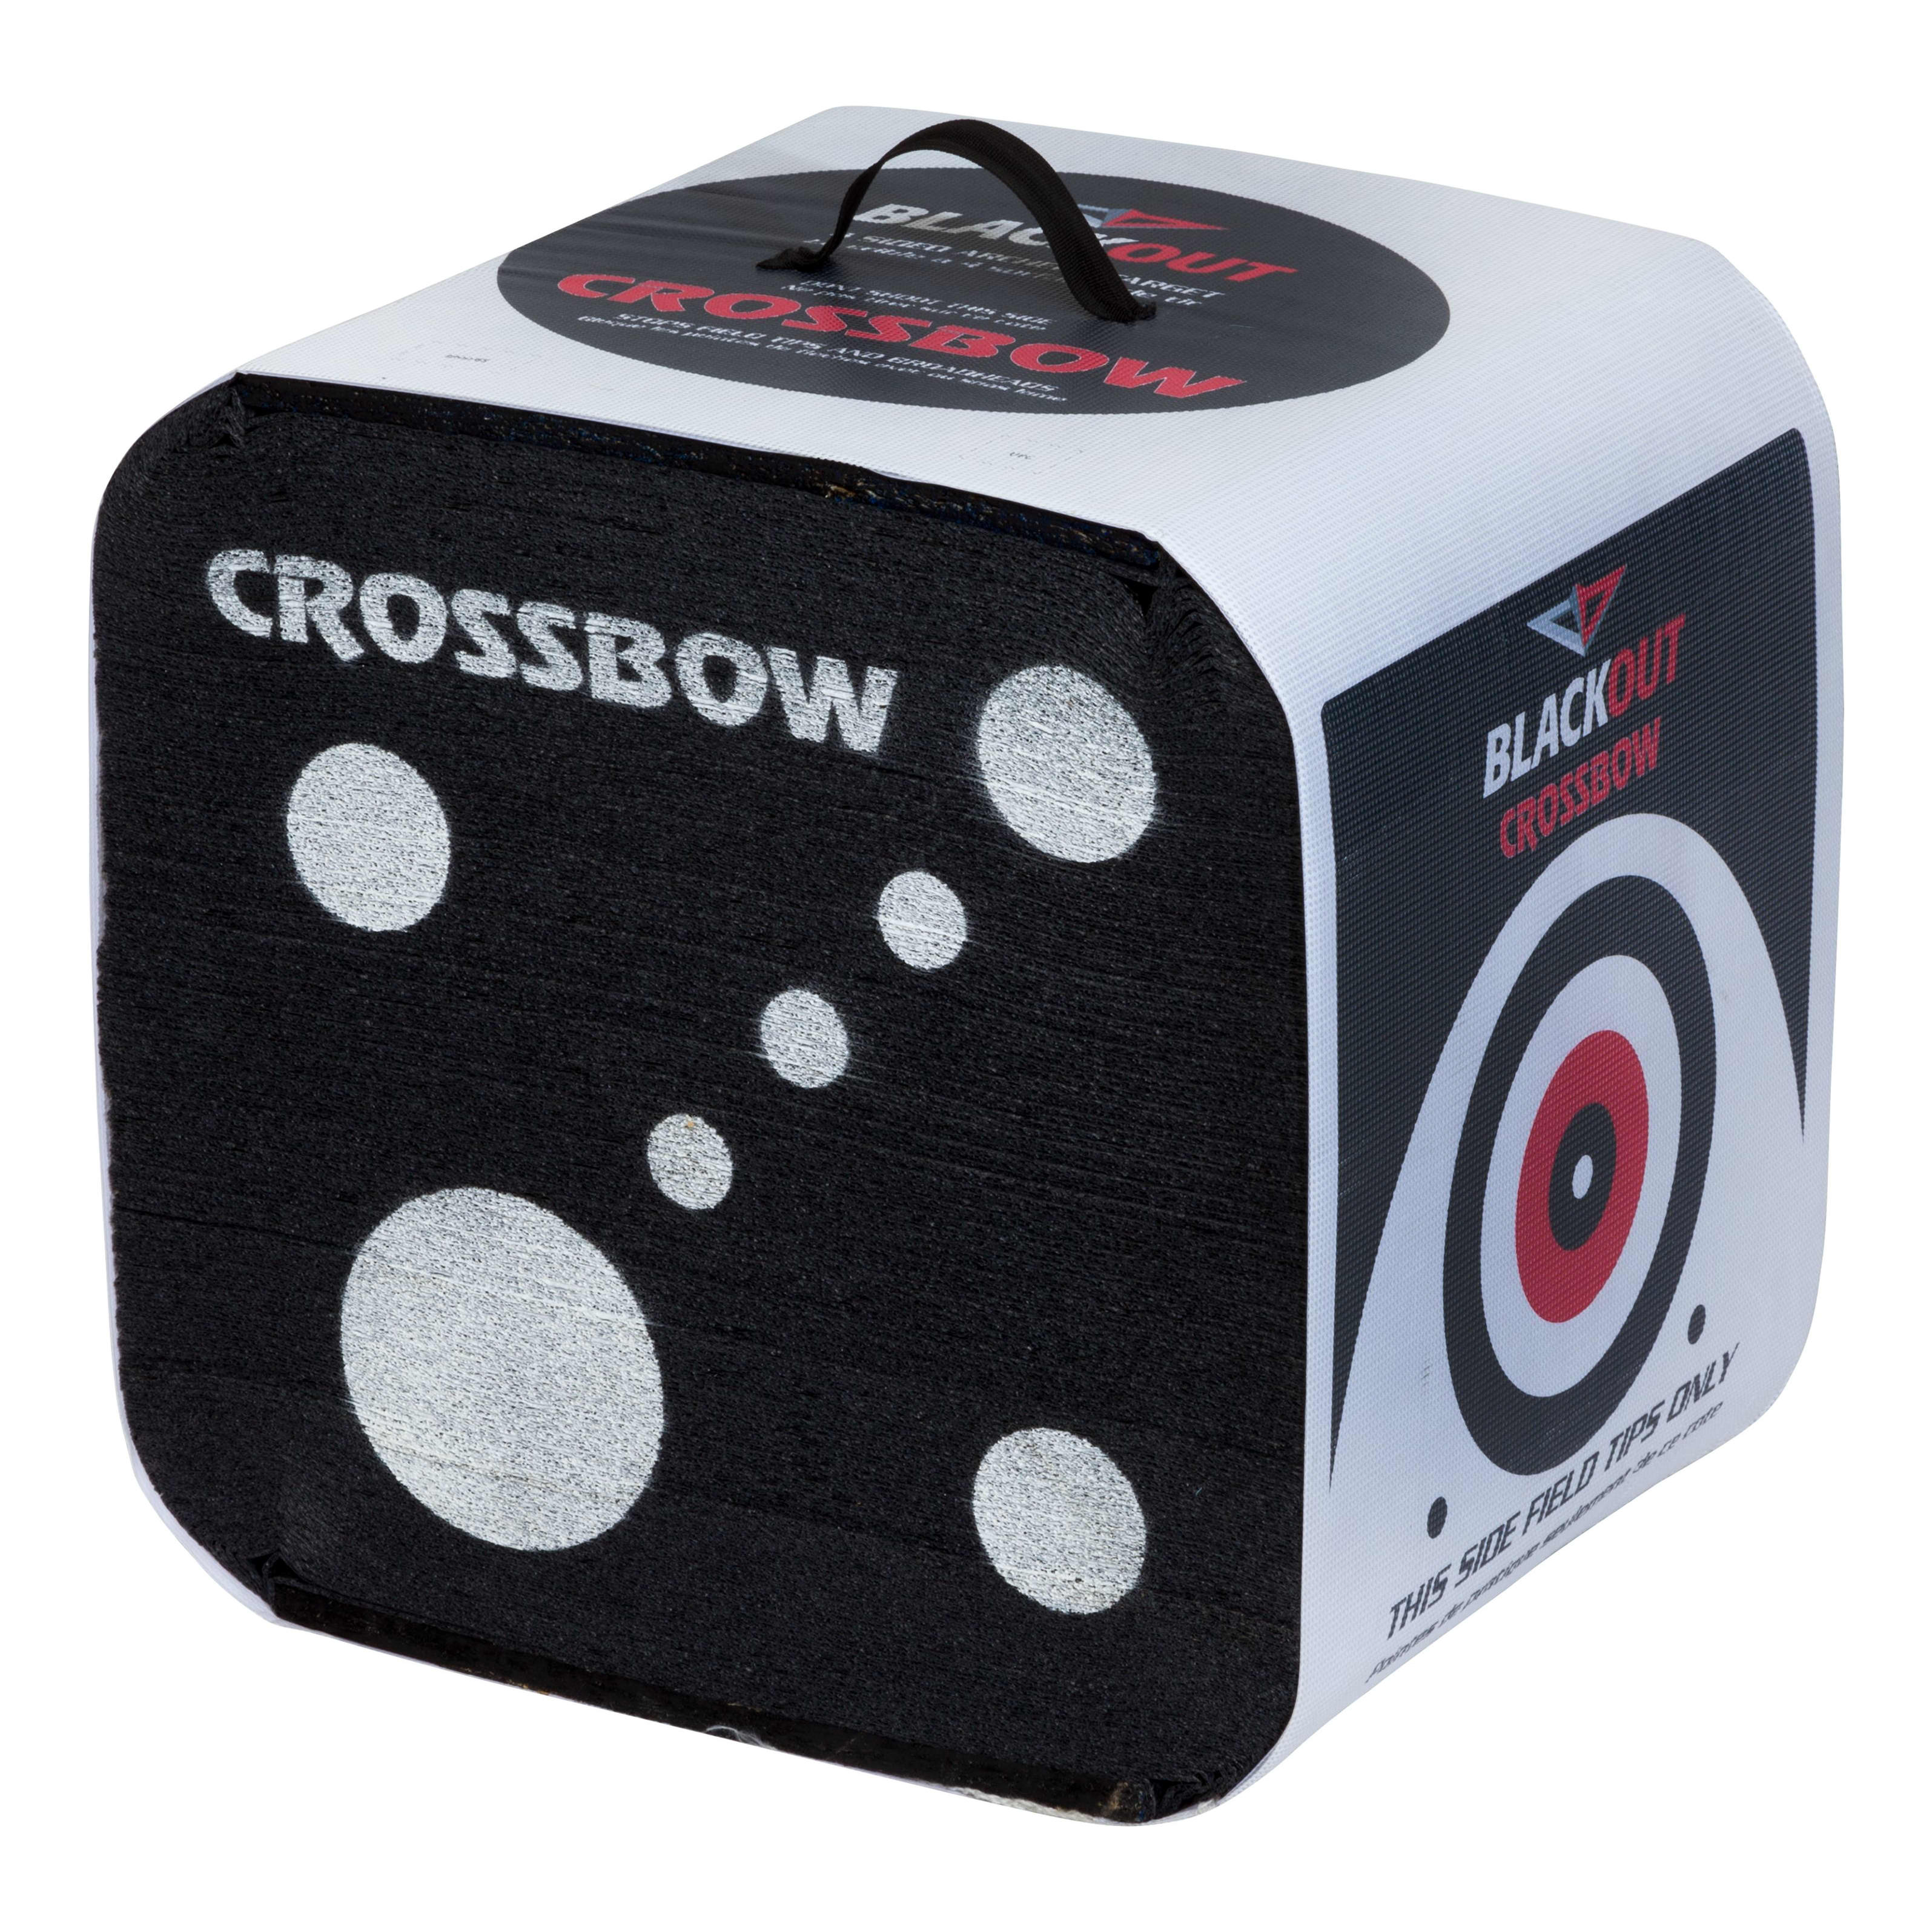 BlackOut® Crossbow Archery Target